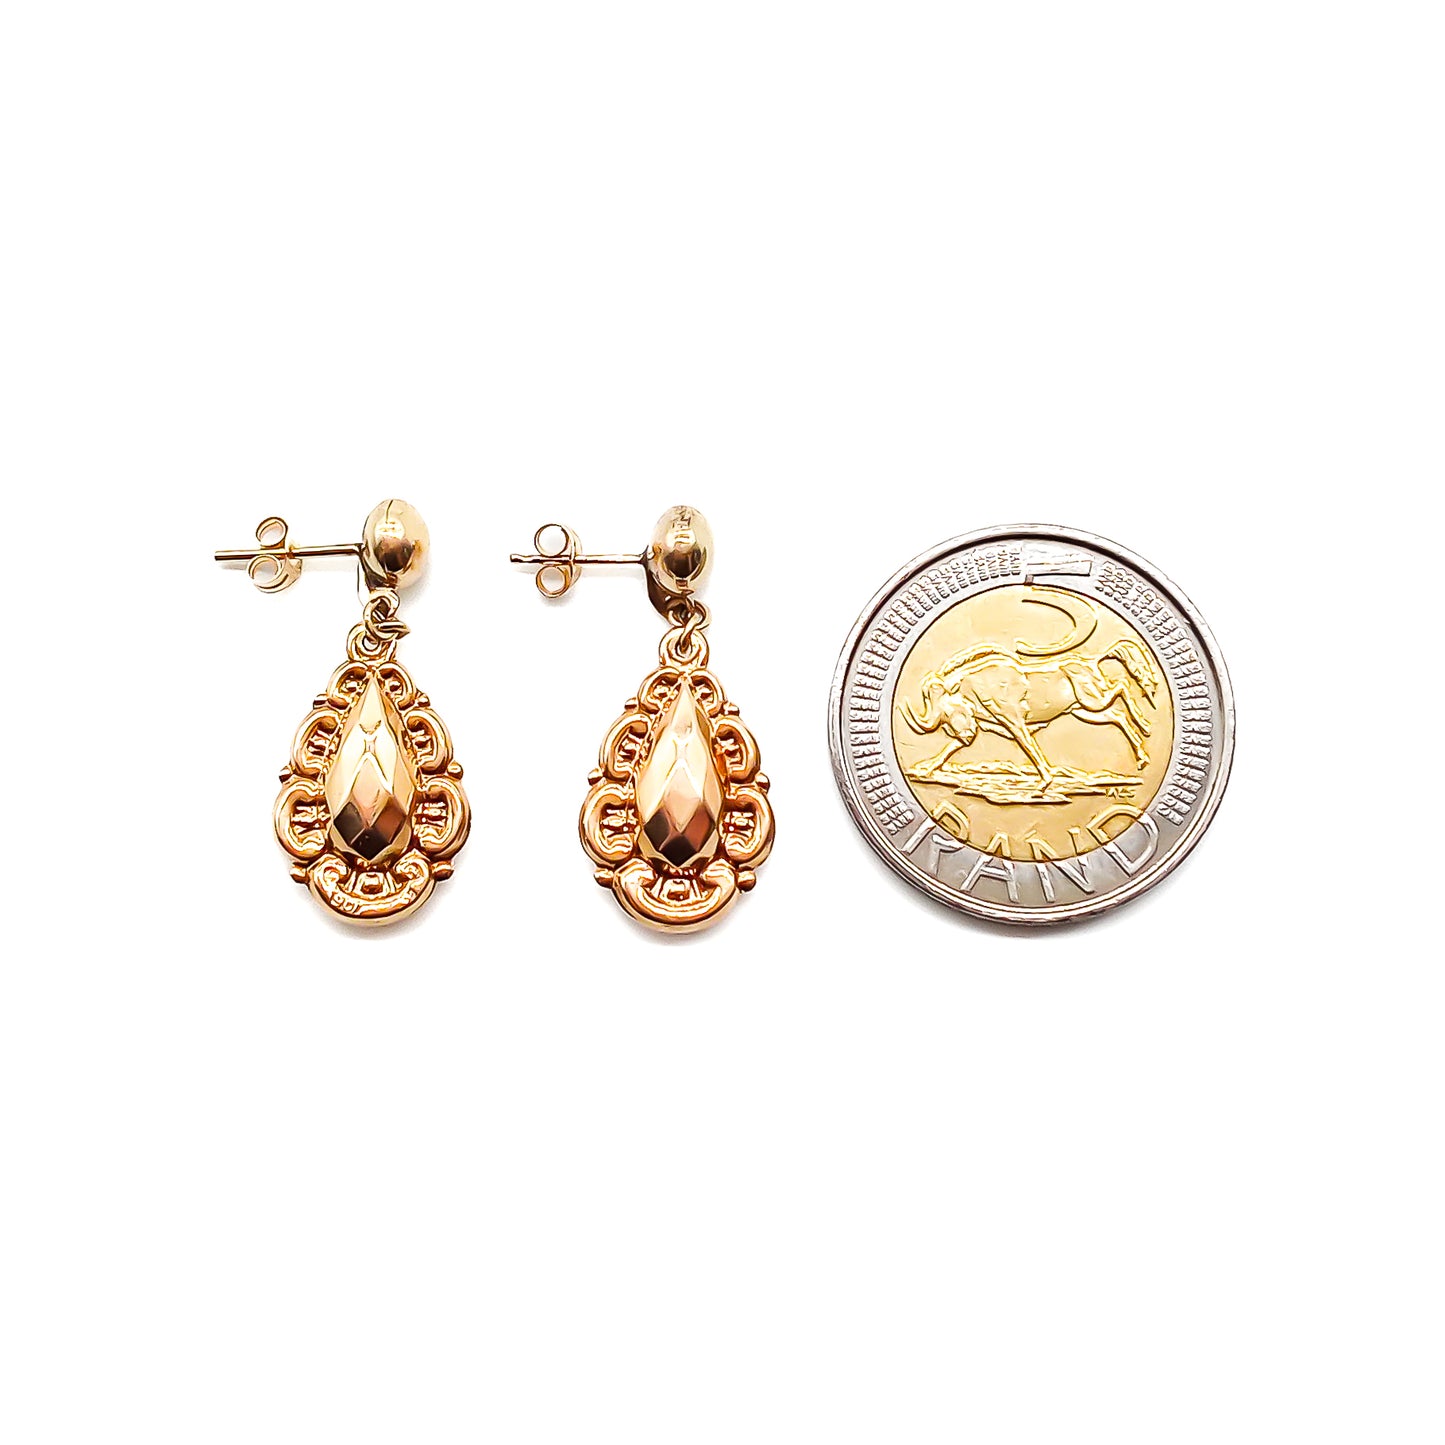 Pretty 9ct rose gold repoussé drop earrings. Circa 1930’s 